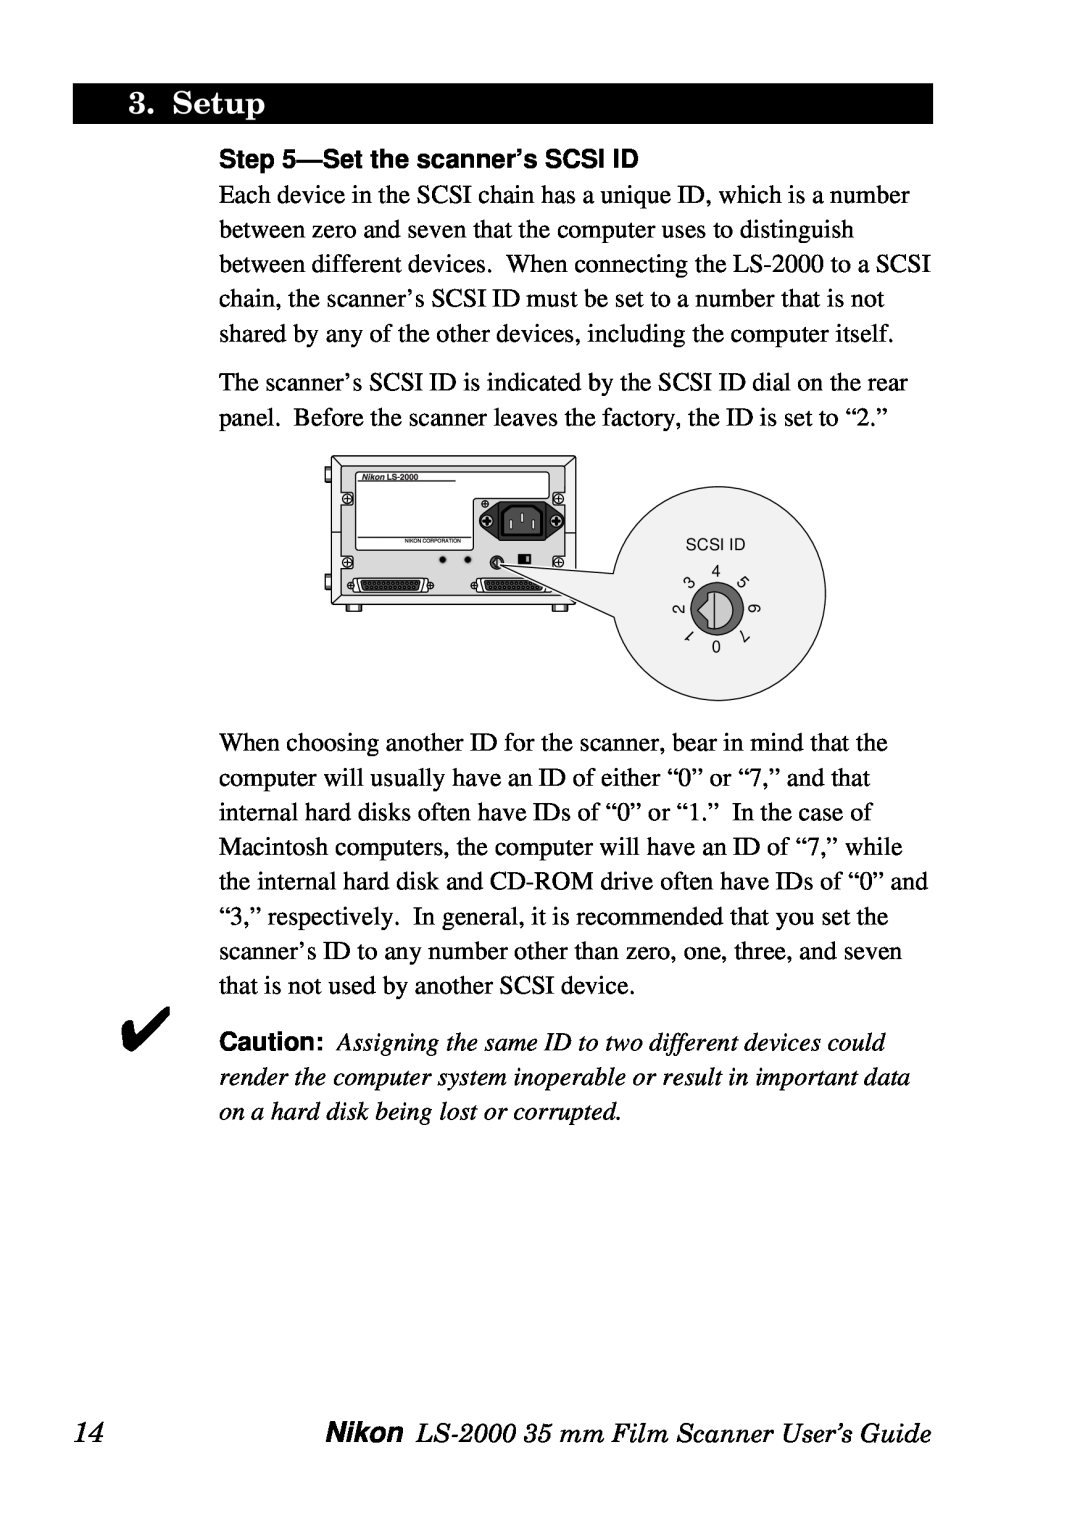 Nikon manual Setthe scanner’s SCSI ID, Setup, Nikon LS-200035 mm Film Scanner User’s Guide 